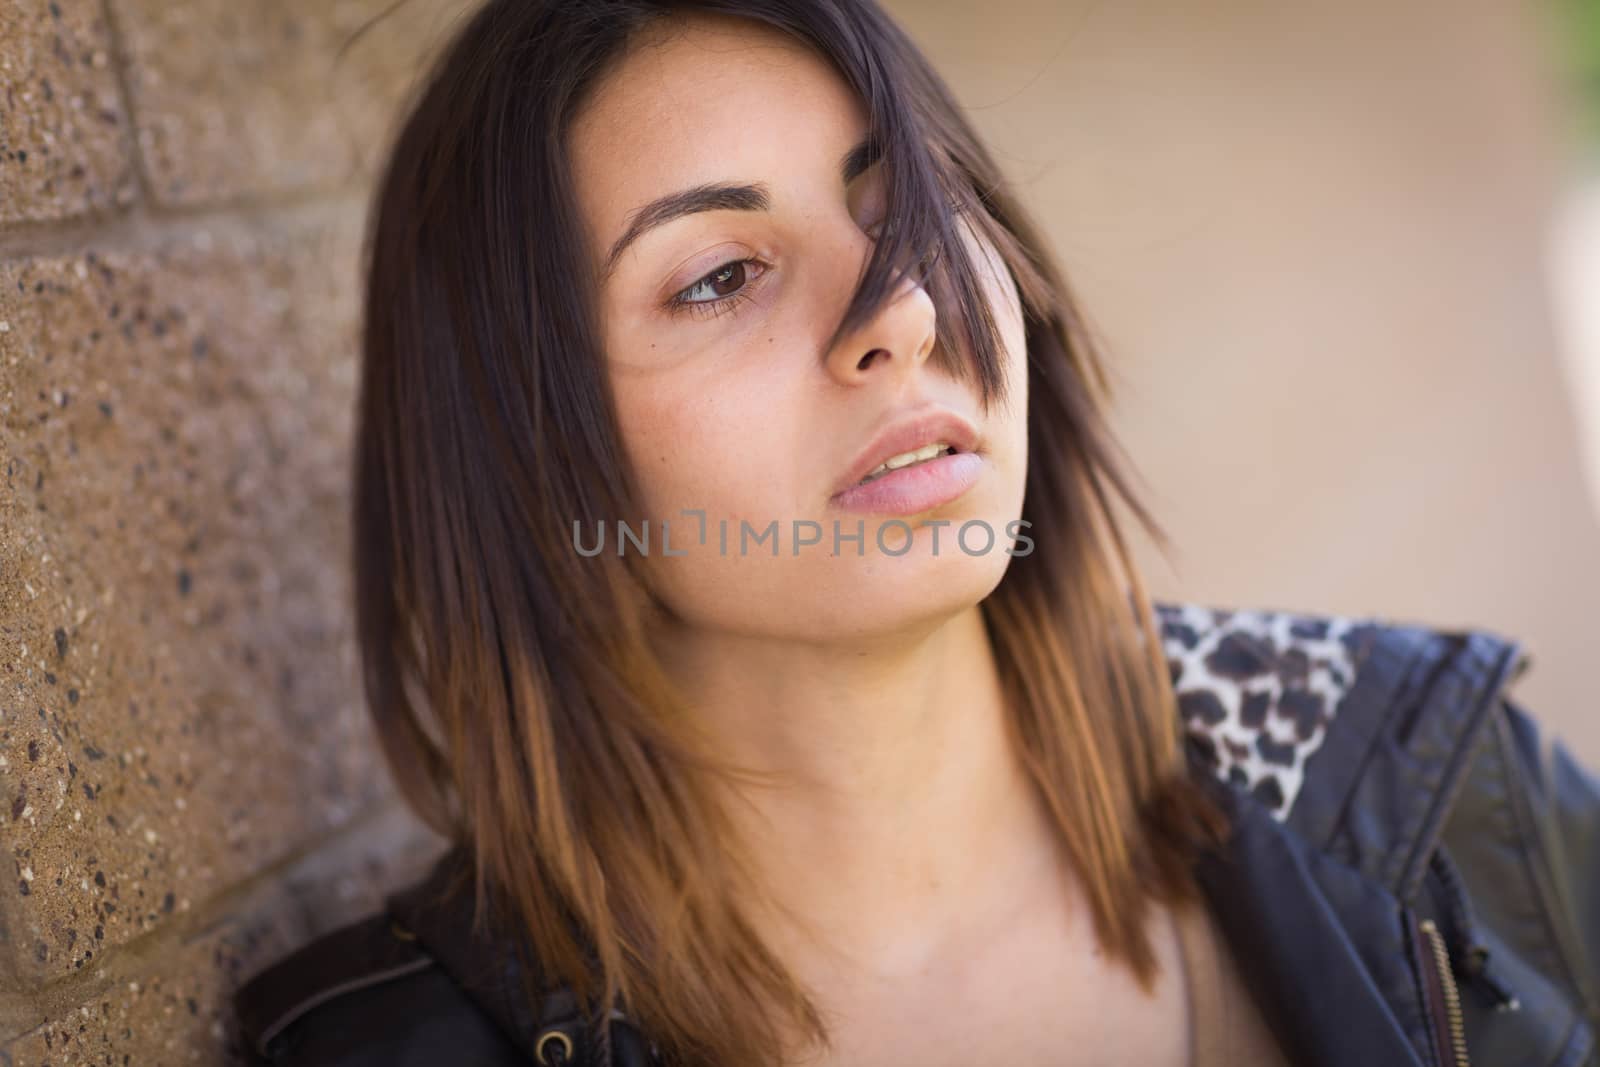 Beautiful Meloncholy Mixed Race Young Woman Portrait Outside.